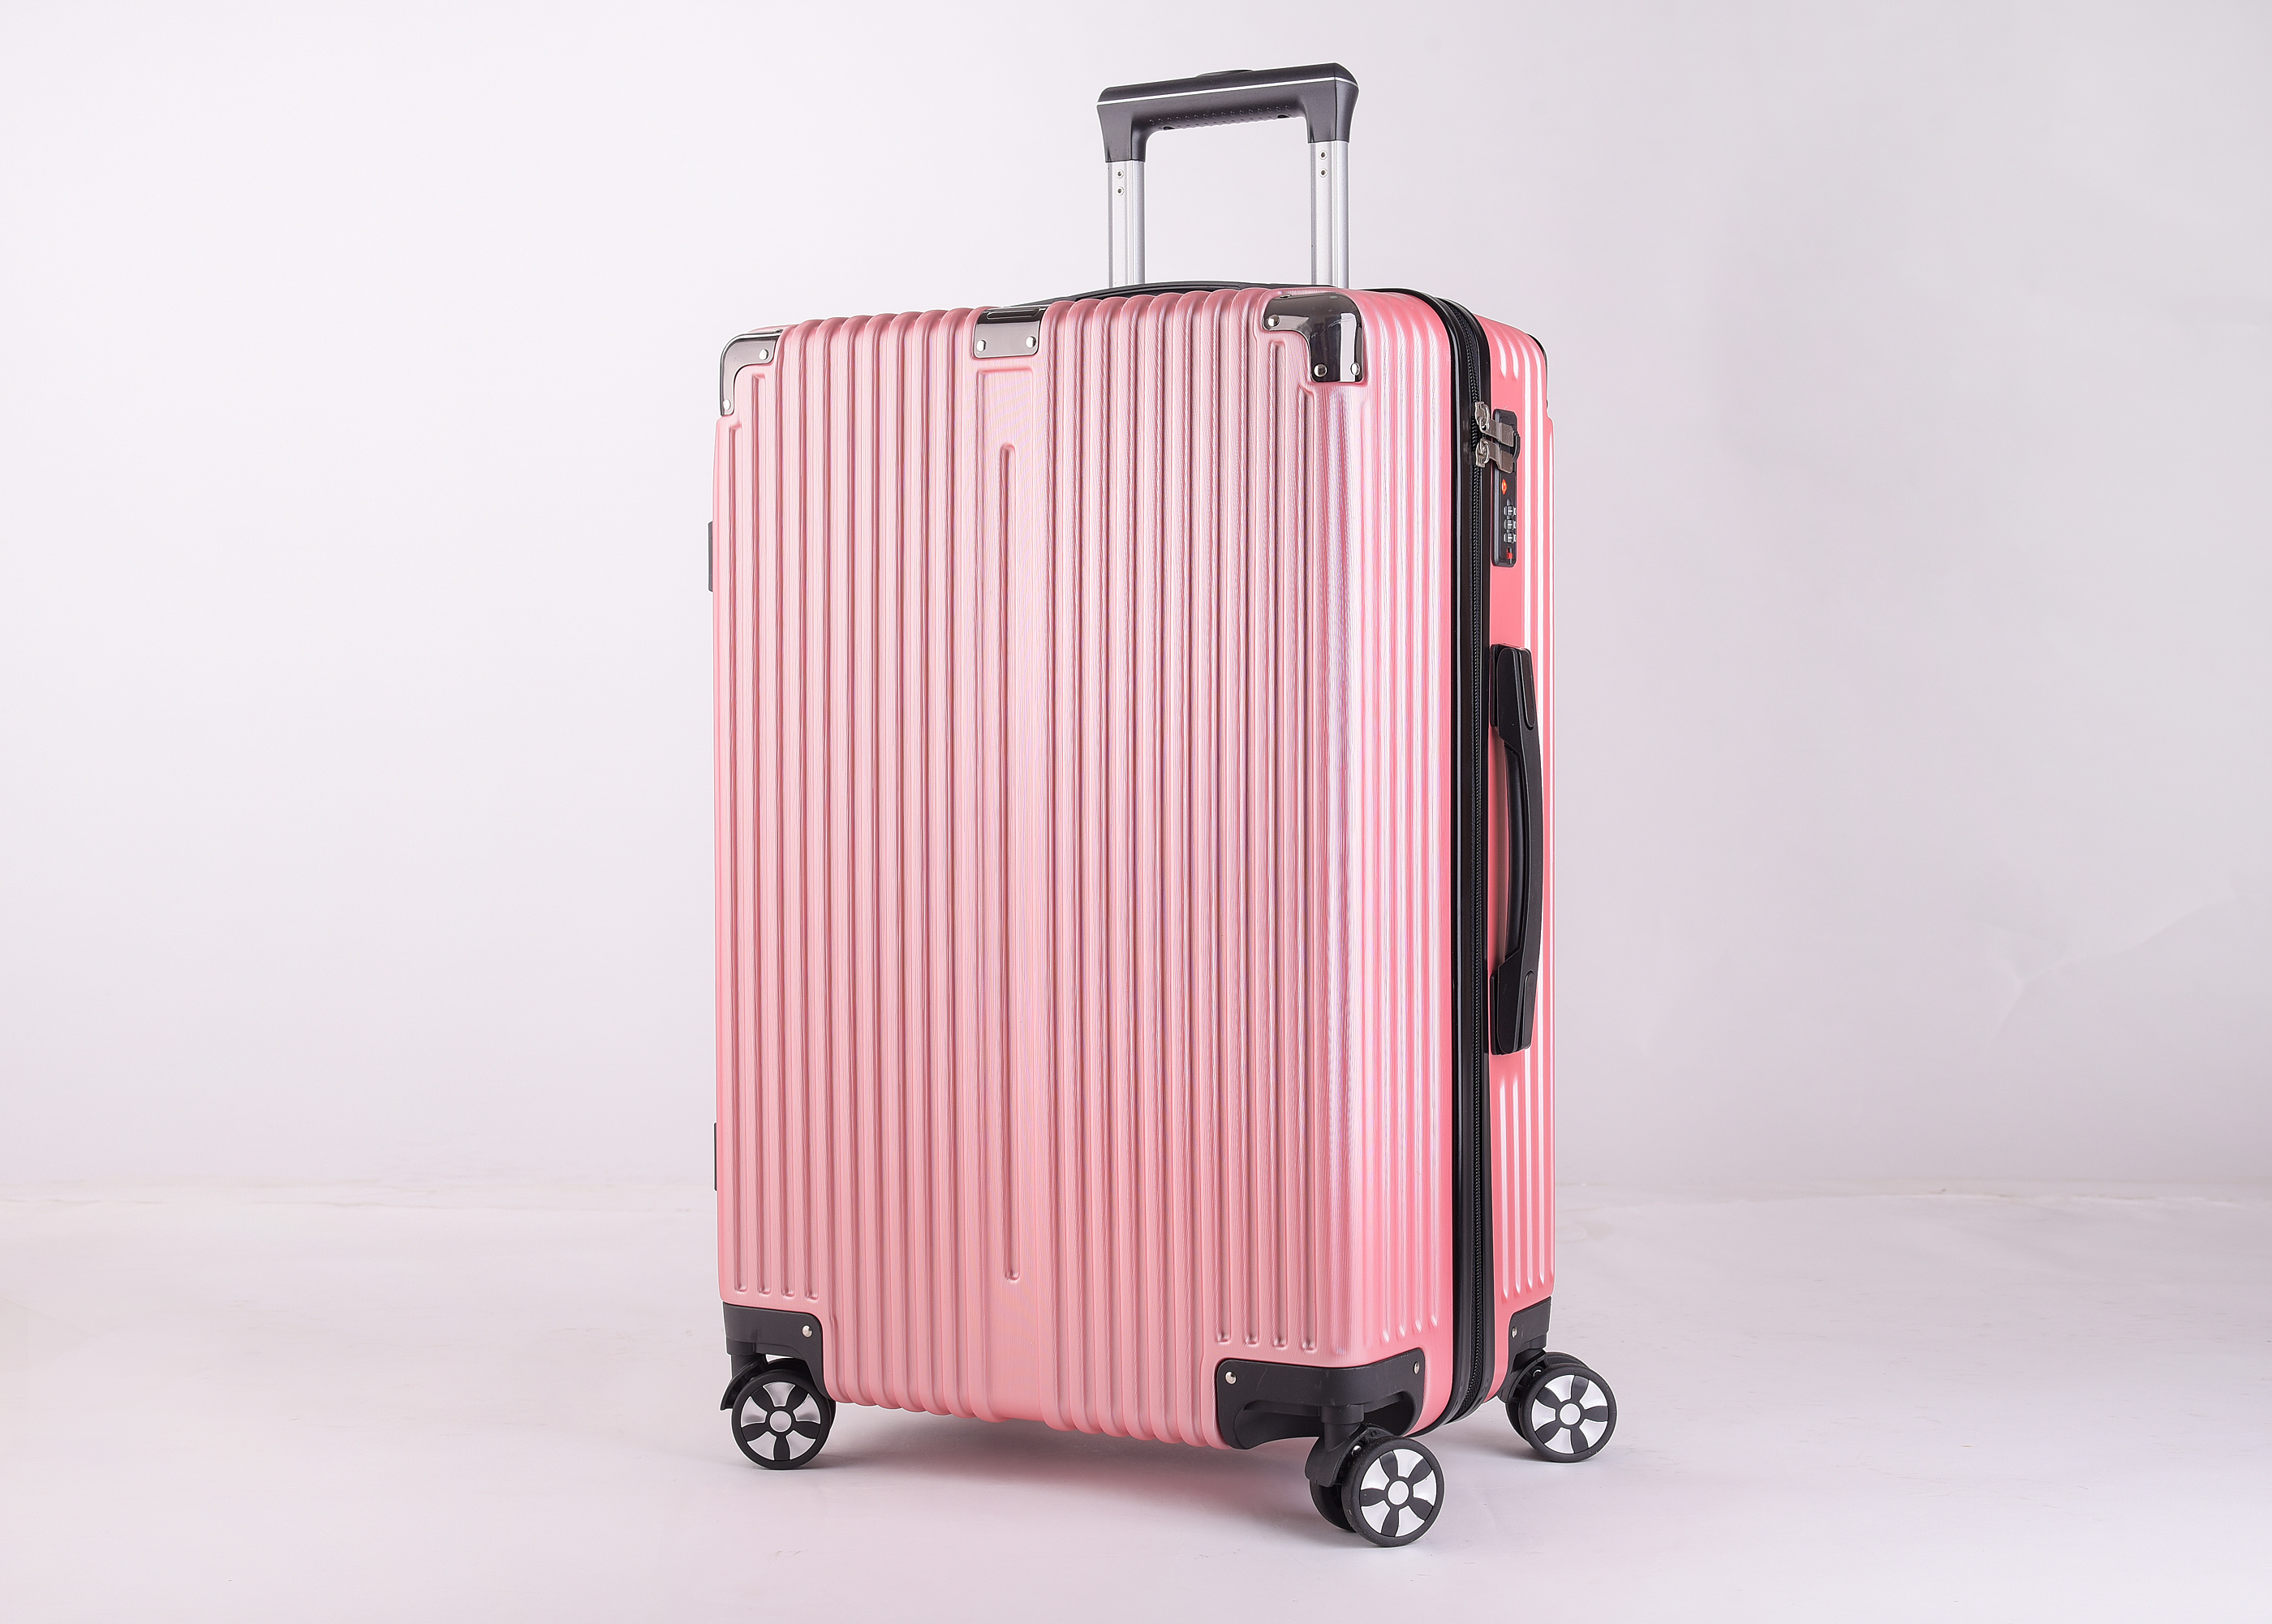 Samsonite Enow 行李箱系列结合了高级功能和高端设计～ - 普象网